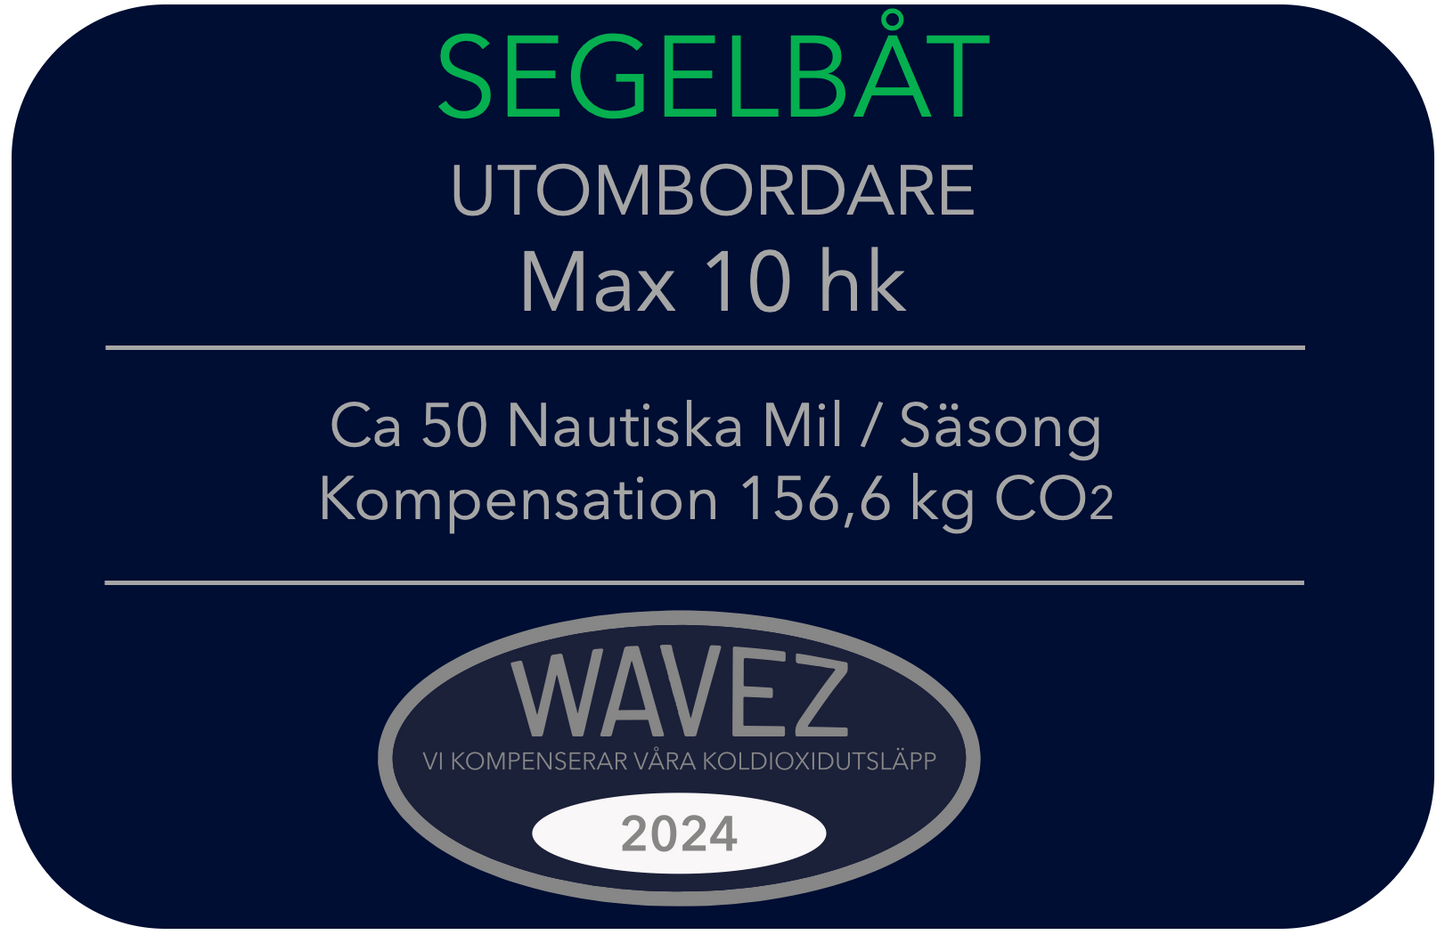 Koldioxidkompensation Segelbåt Utombordare Max 10 hk